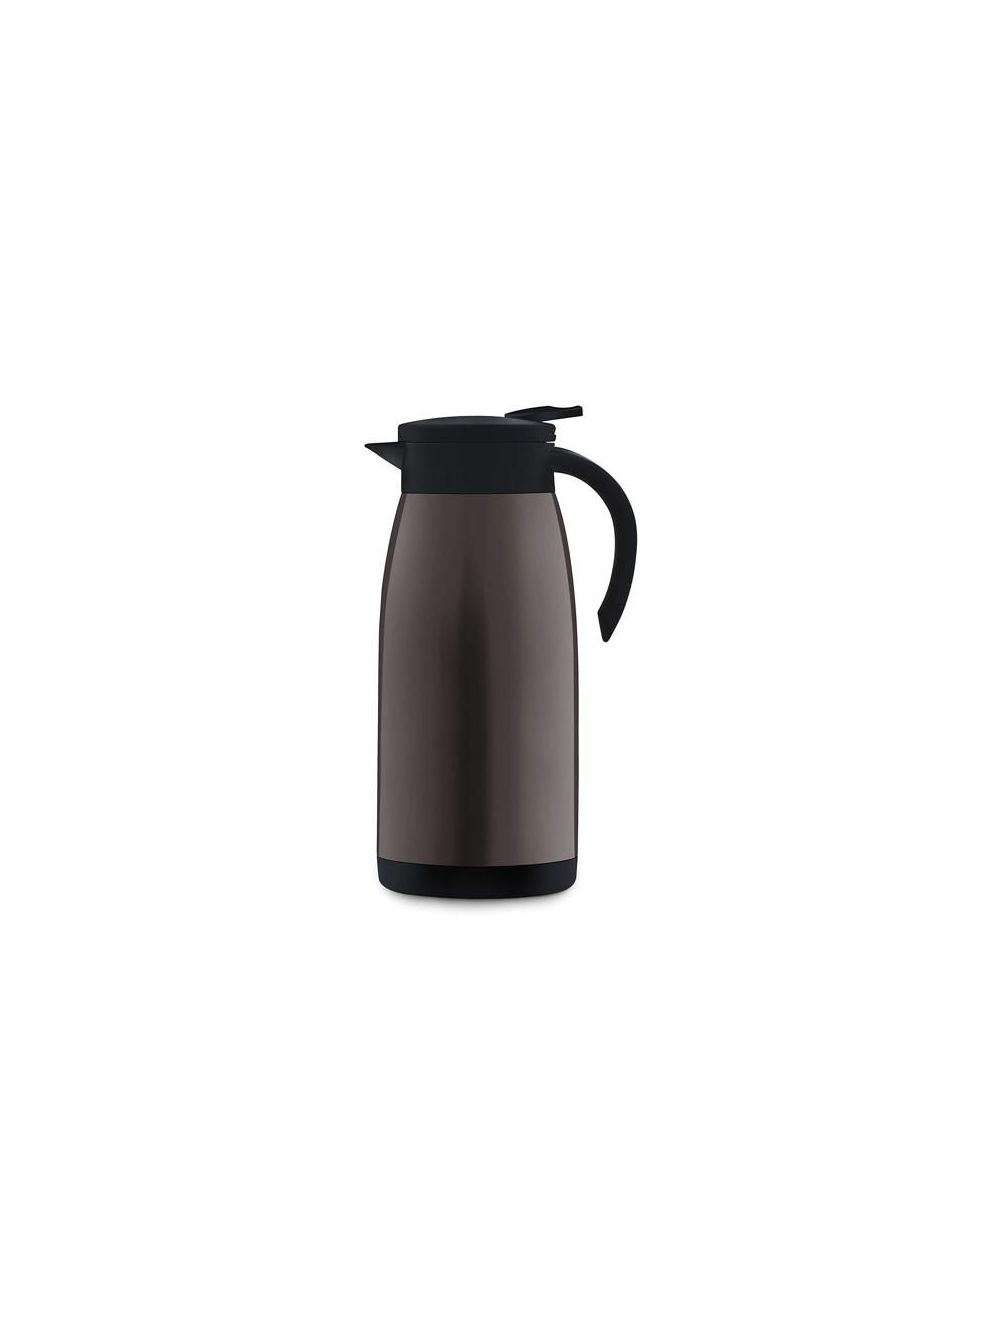 Royalford RF9701 1.5L Coffee Pot